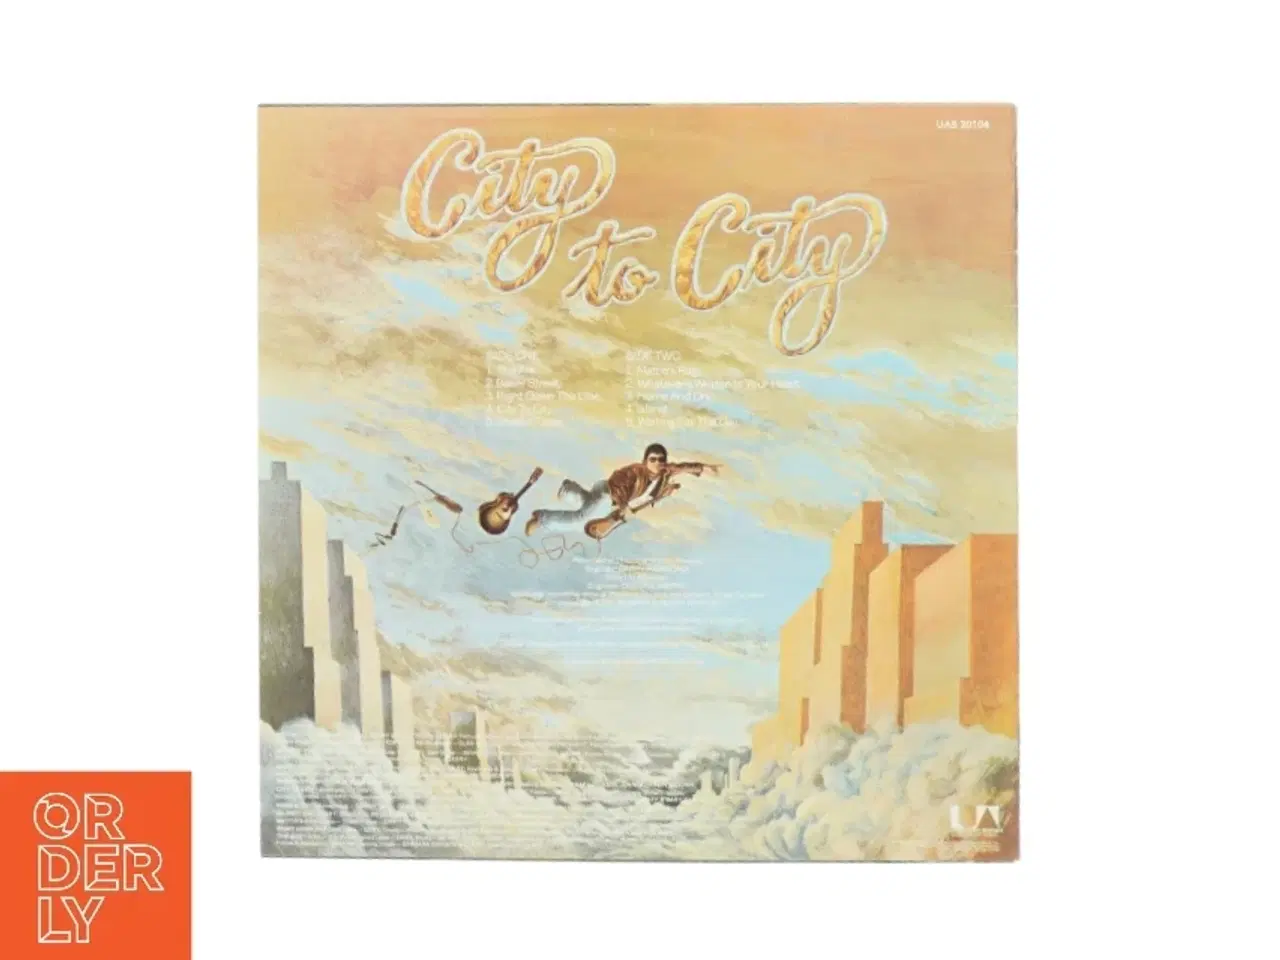 Billede 3 - Gerry Rafferty - City to City Vinyl LP fra United Artists Records (str. 31 x 31 cm)